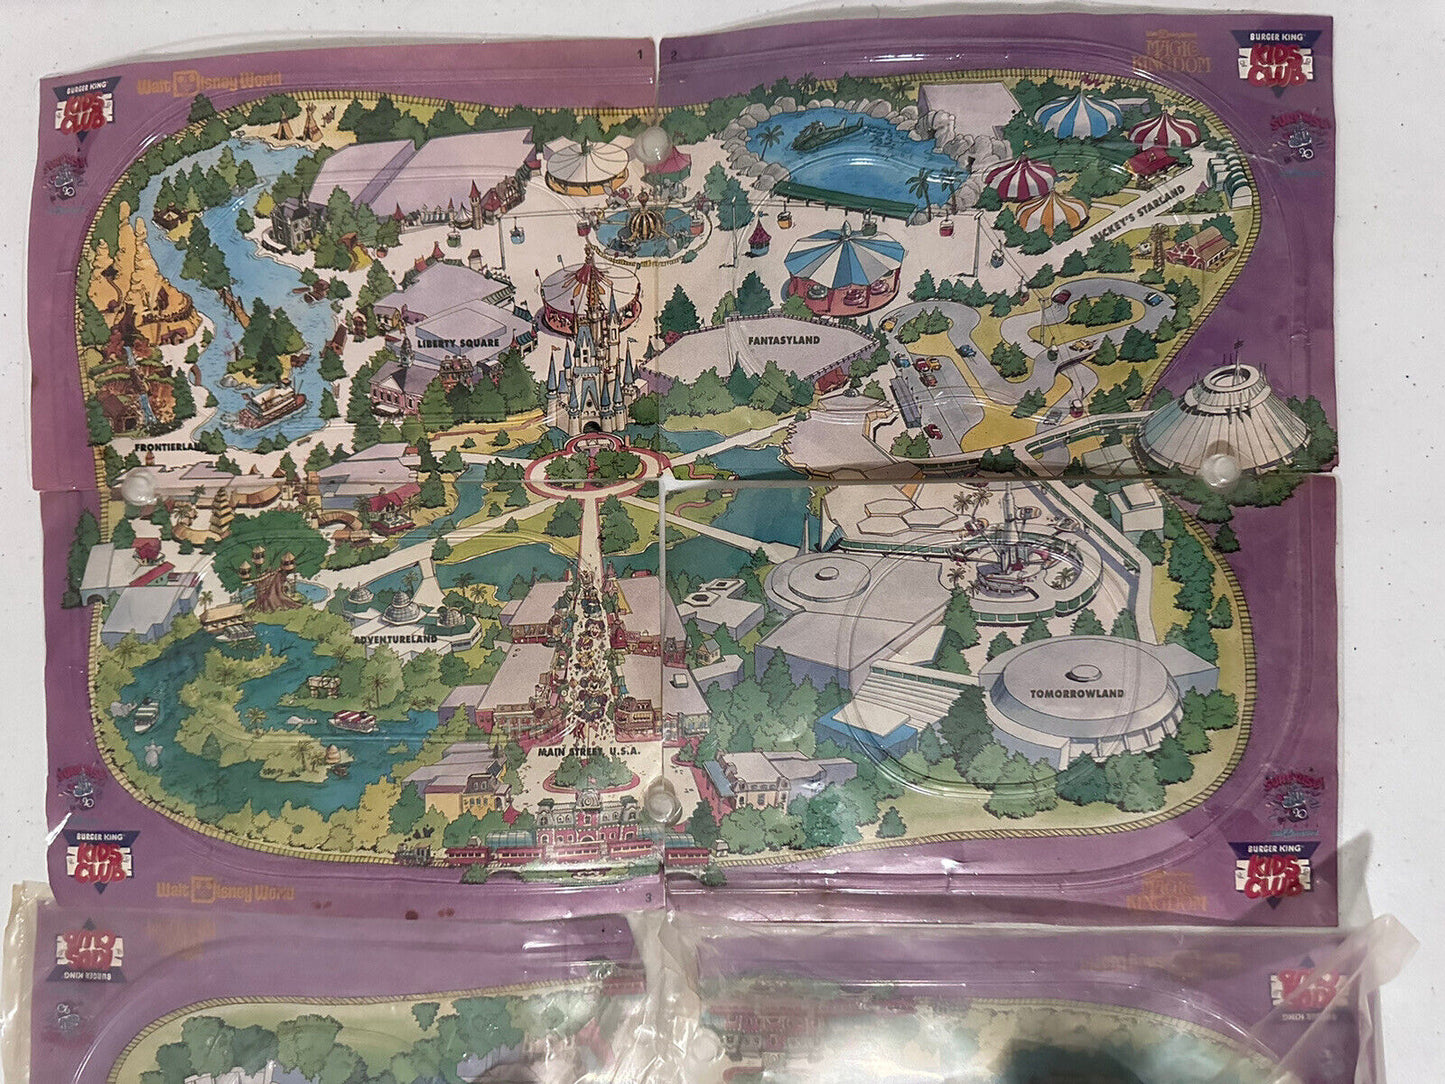 Vintage 1991 Burger King Kids Club Disneyland Magic Kingdom Map with Windup Toys - Complete Set - TreasuTiques